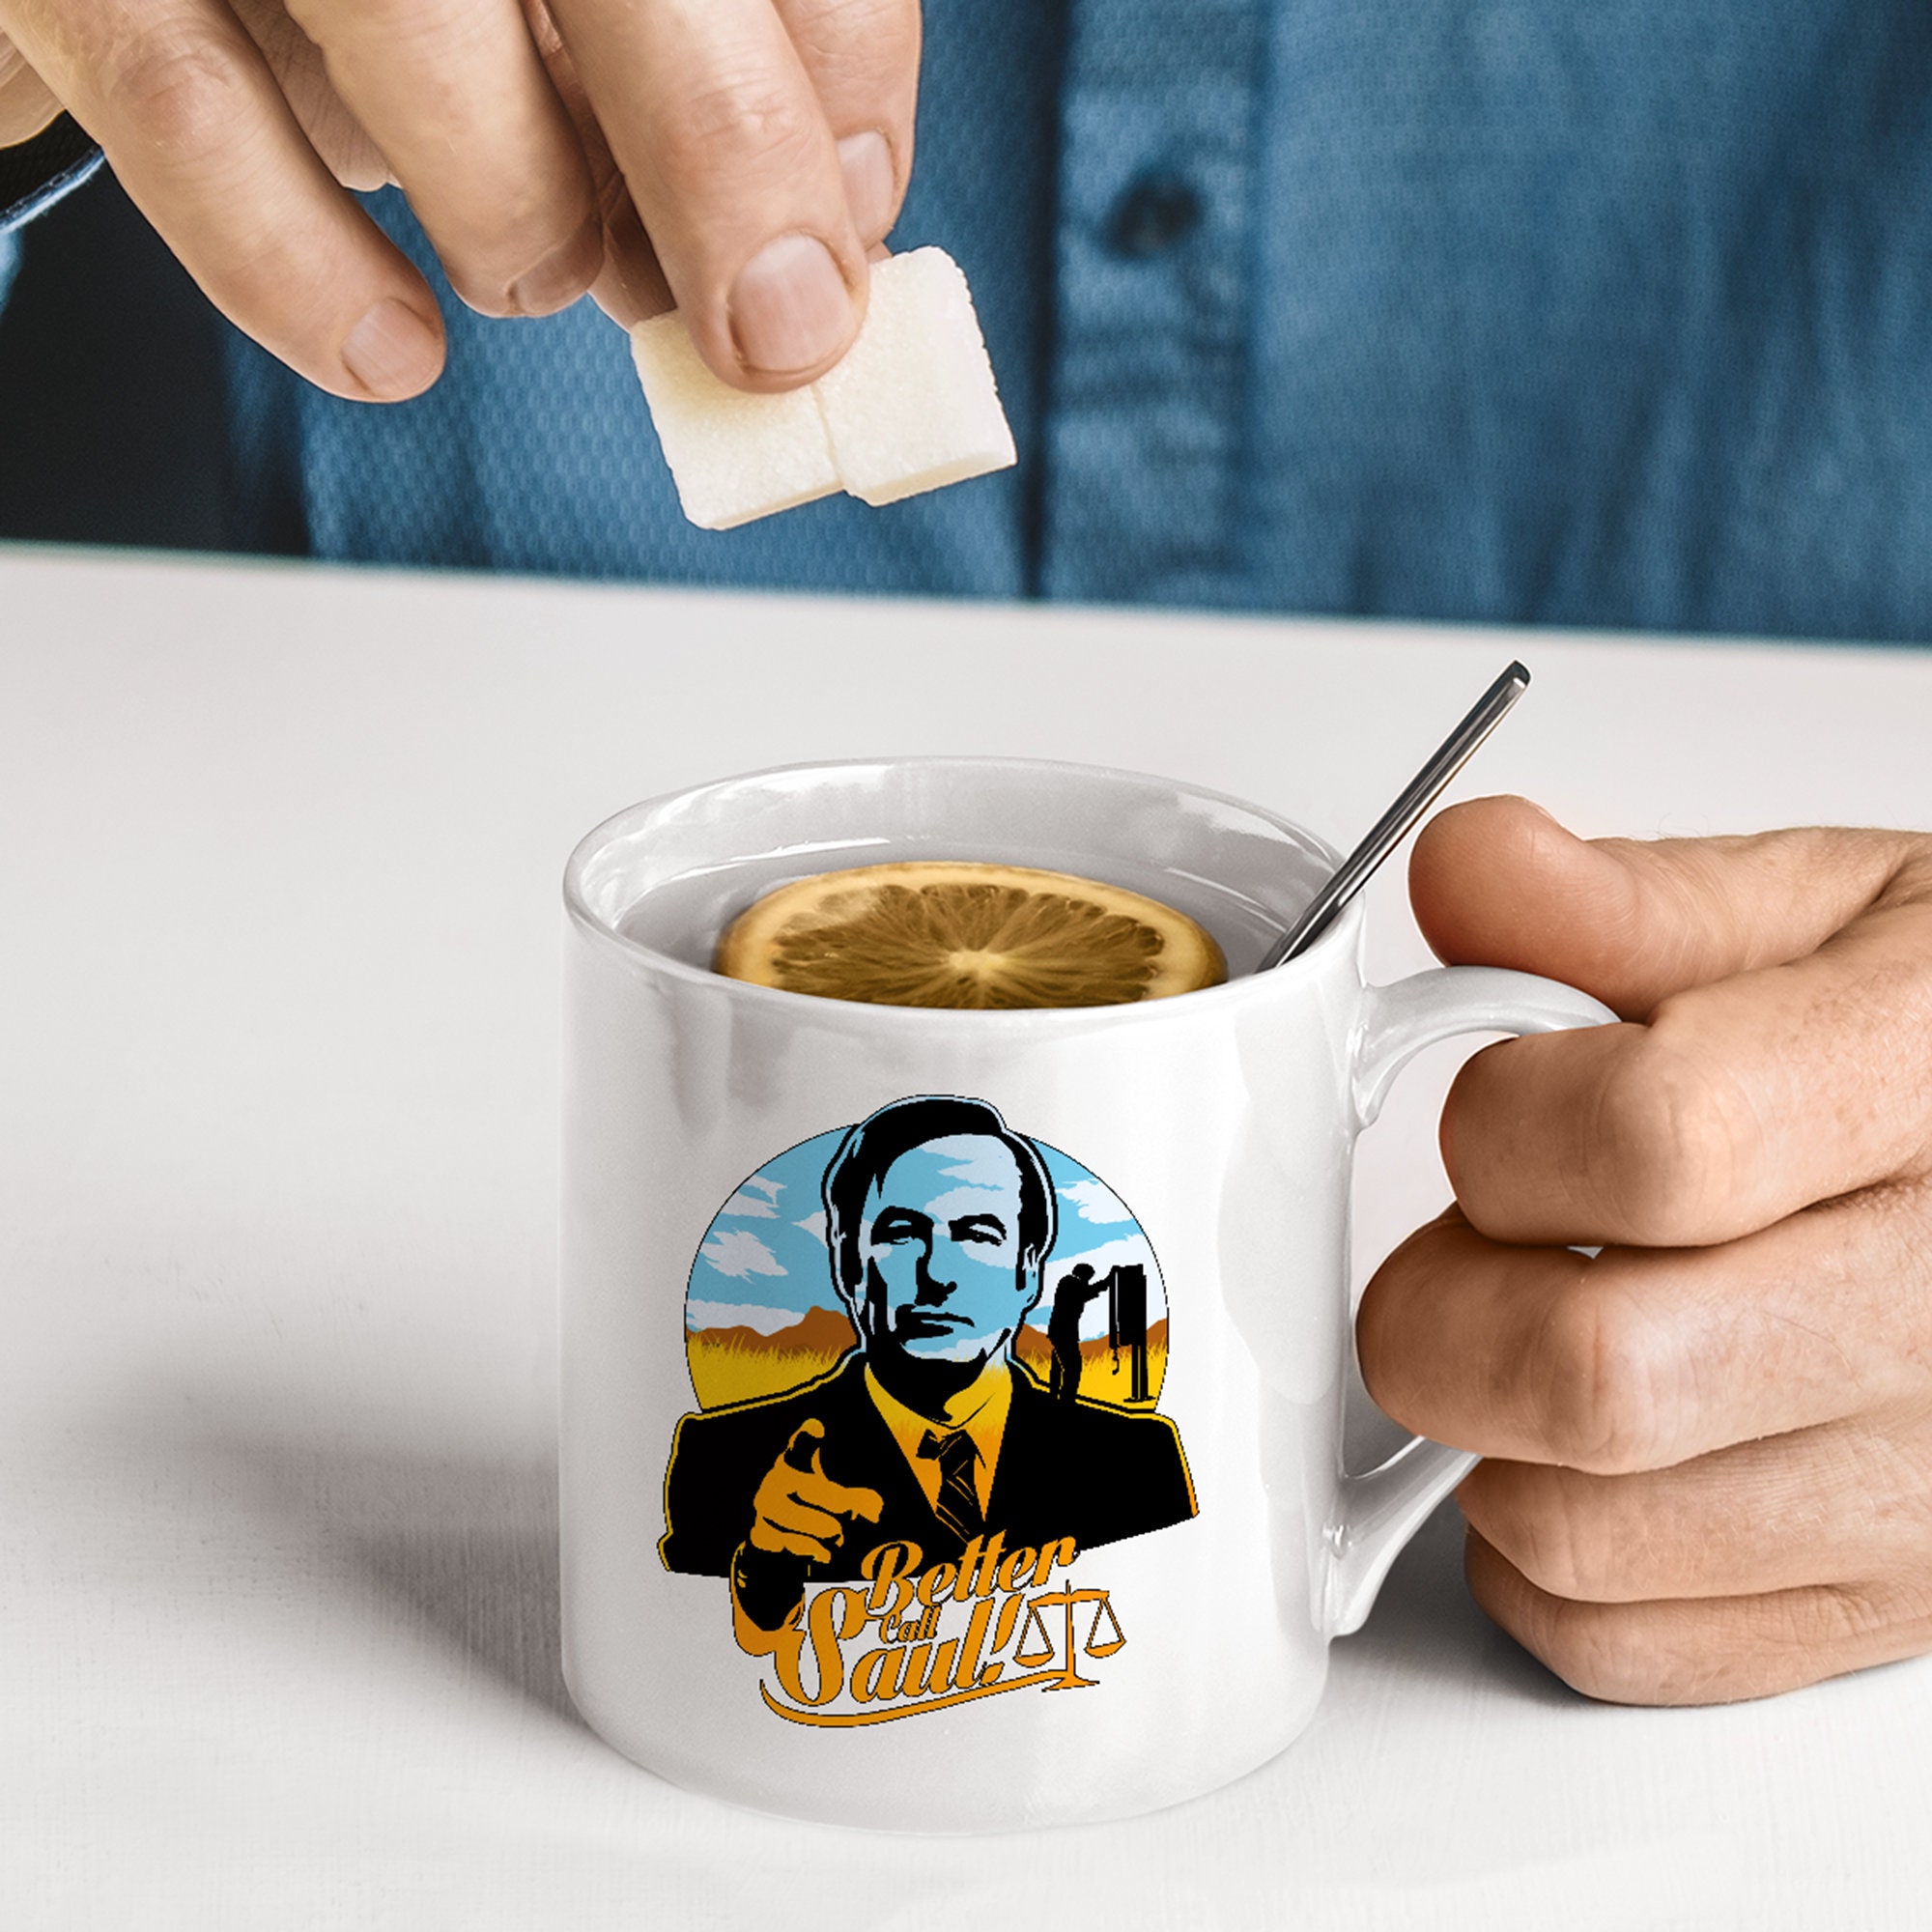 Better Call Saul Retro Mug Funny Coffee Mug - Deny Everything Cup